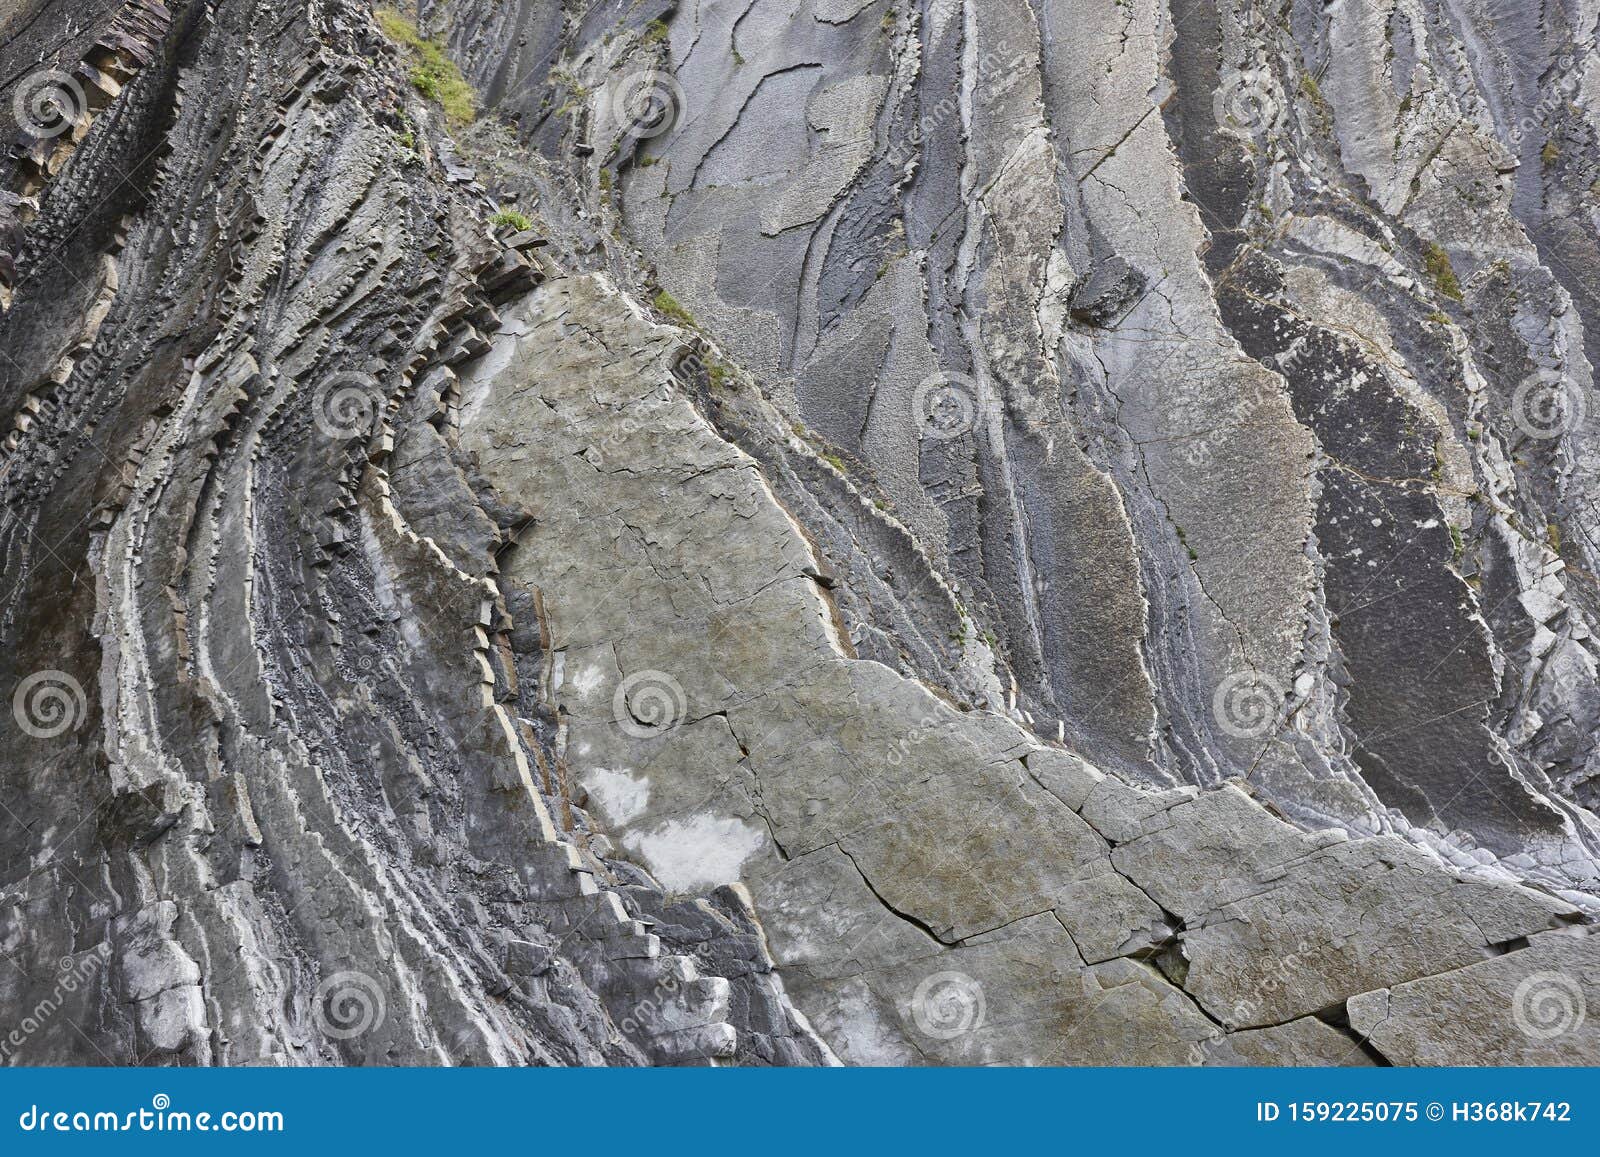 flysch dramatic rock formation cantabric coastline in zumaia, euskadi